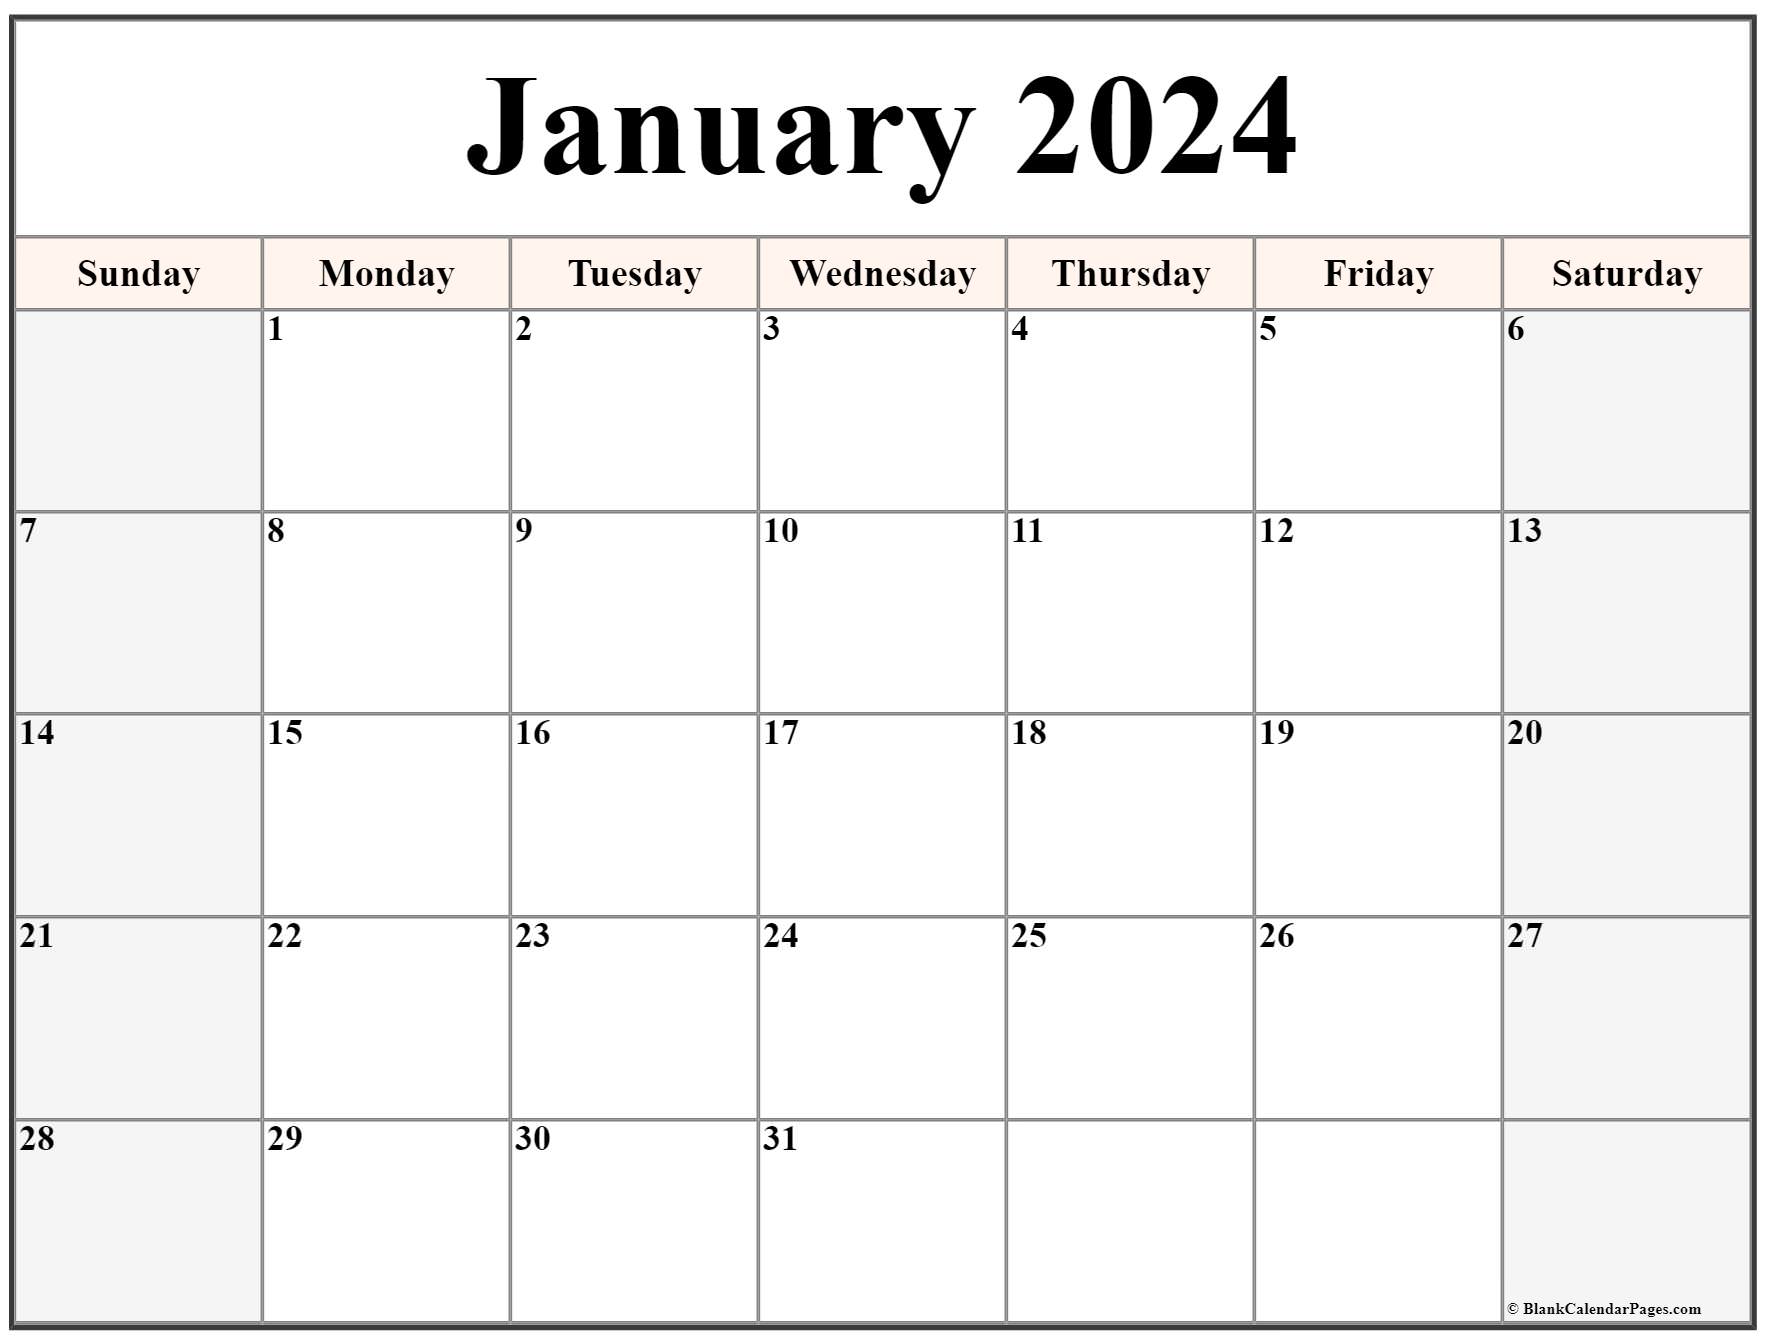 january-2023-calendar-printable-calendar-2023-planner-2023-design-porn-sex-picture